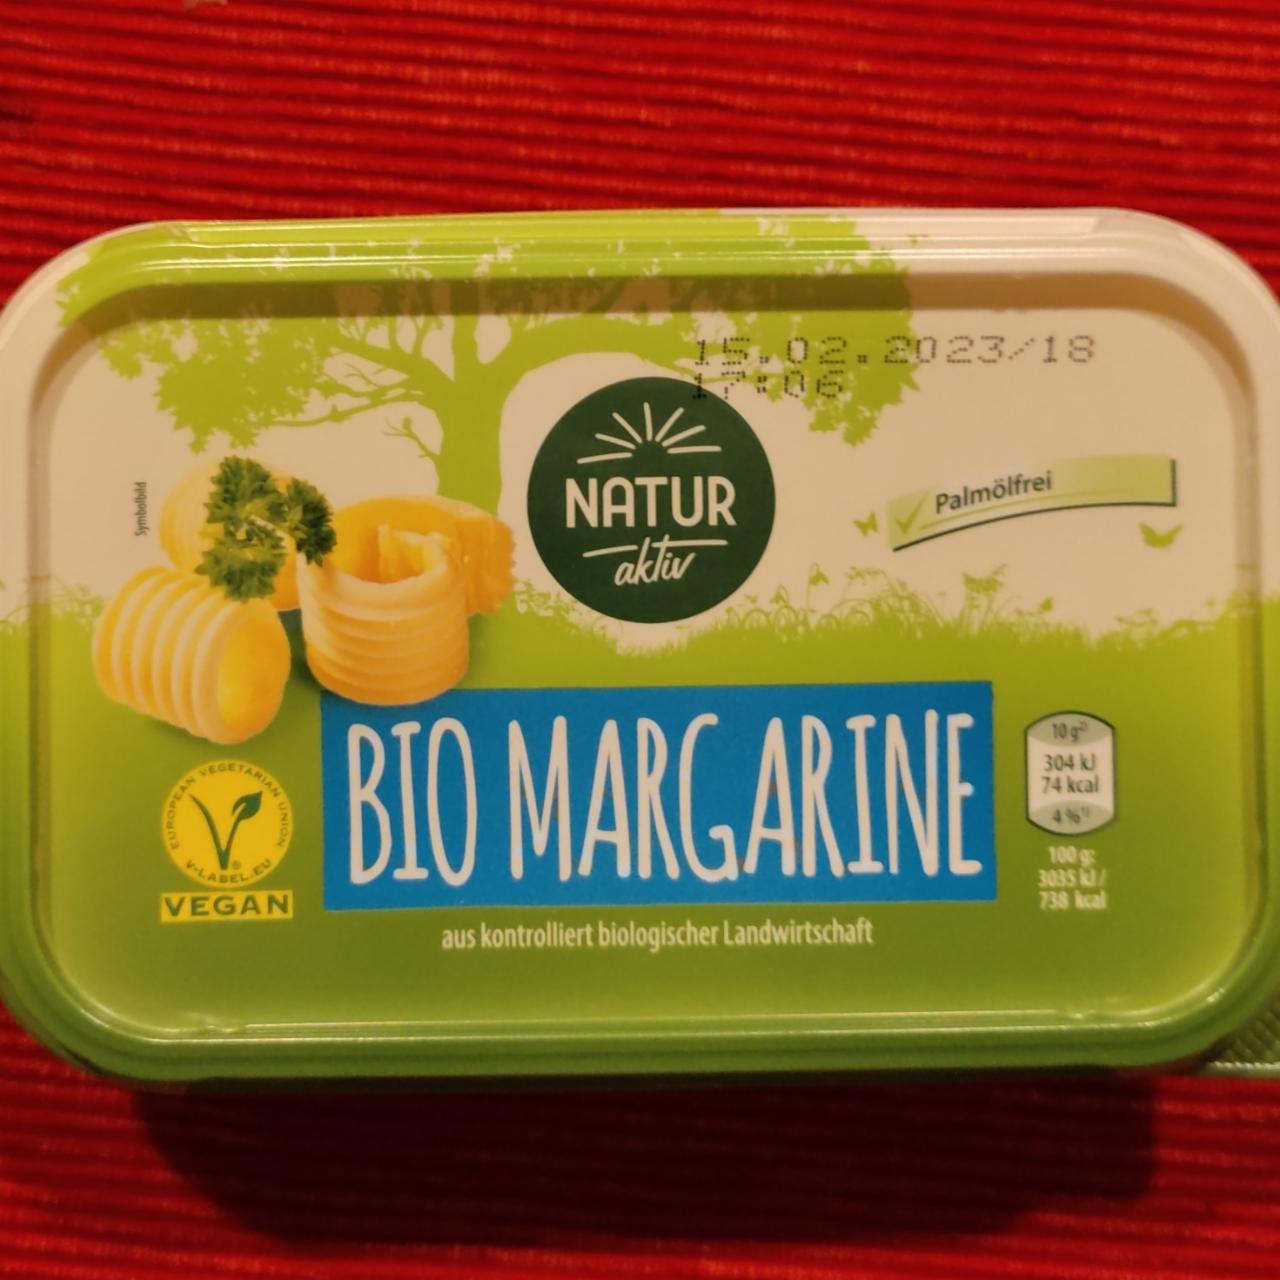 Fotografie - Bio Margarine Natur aktiv